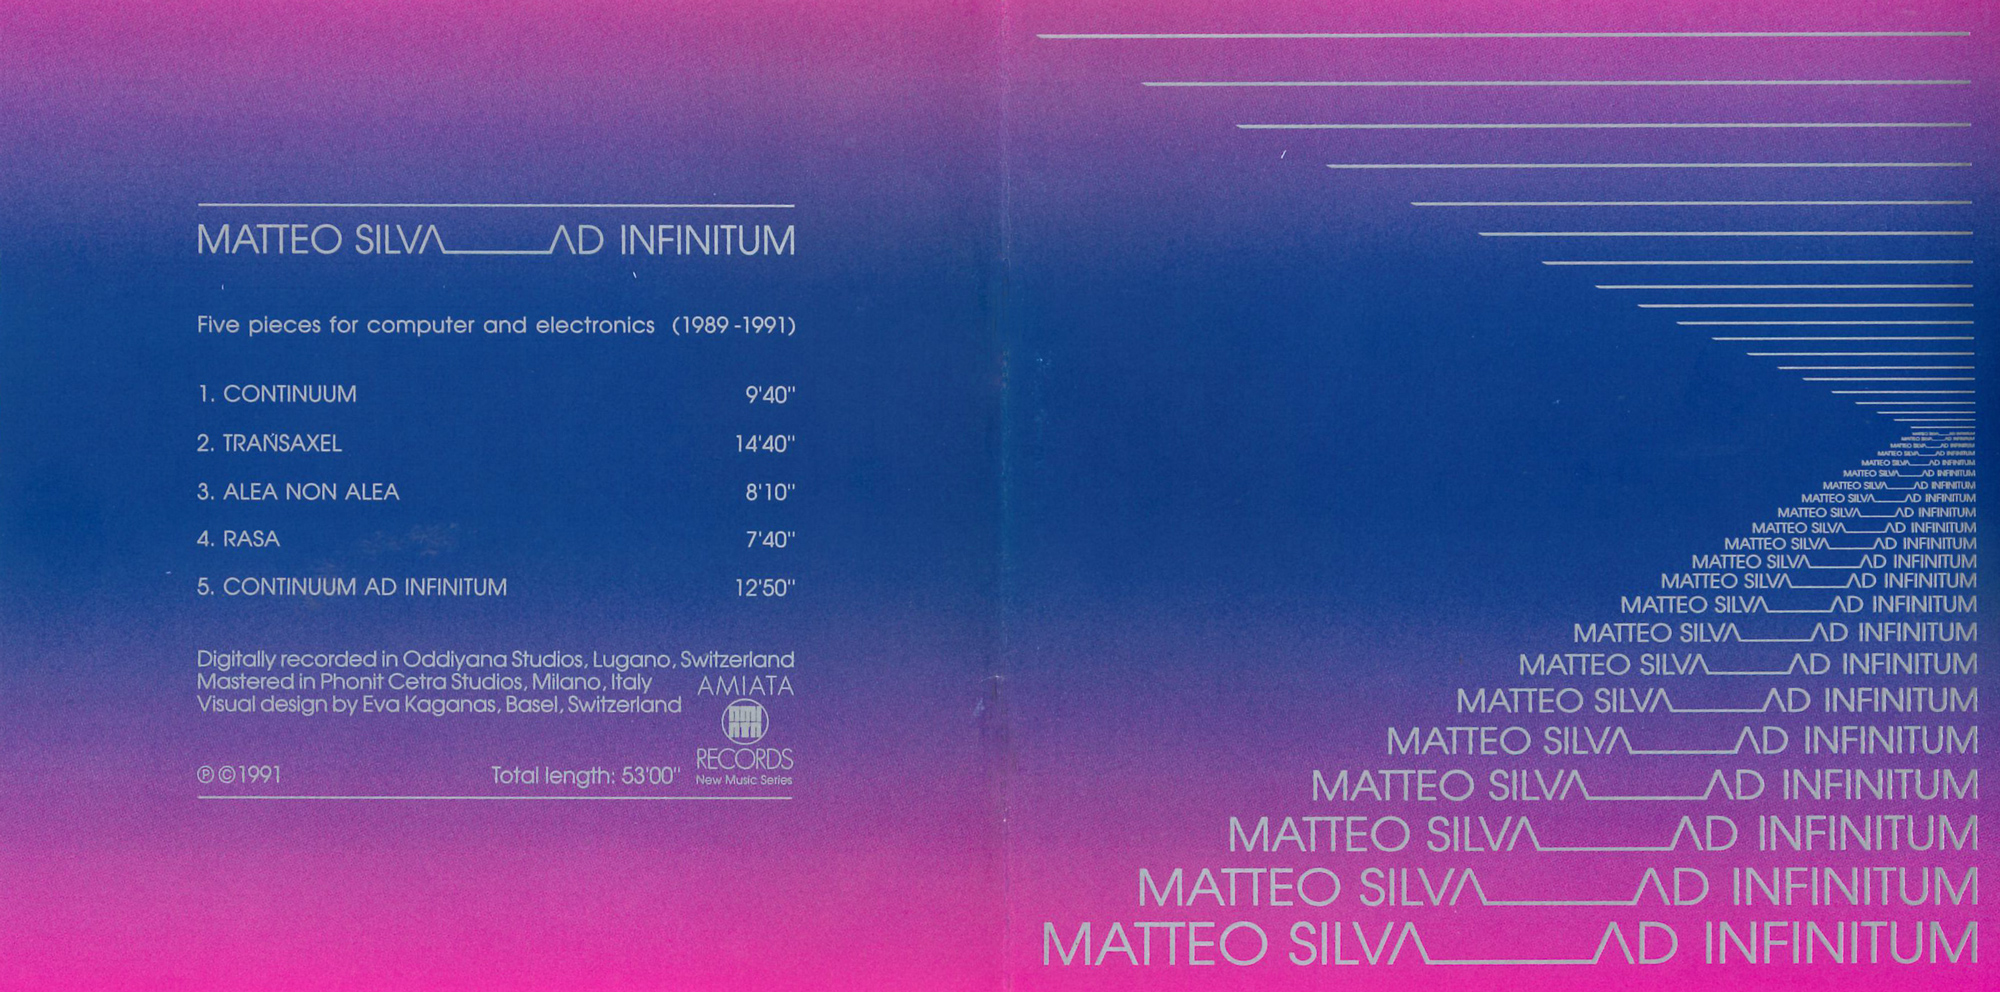 Matteo Silva - Ad Infinitum - Amiata Records